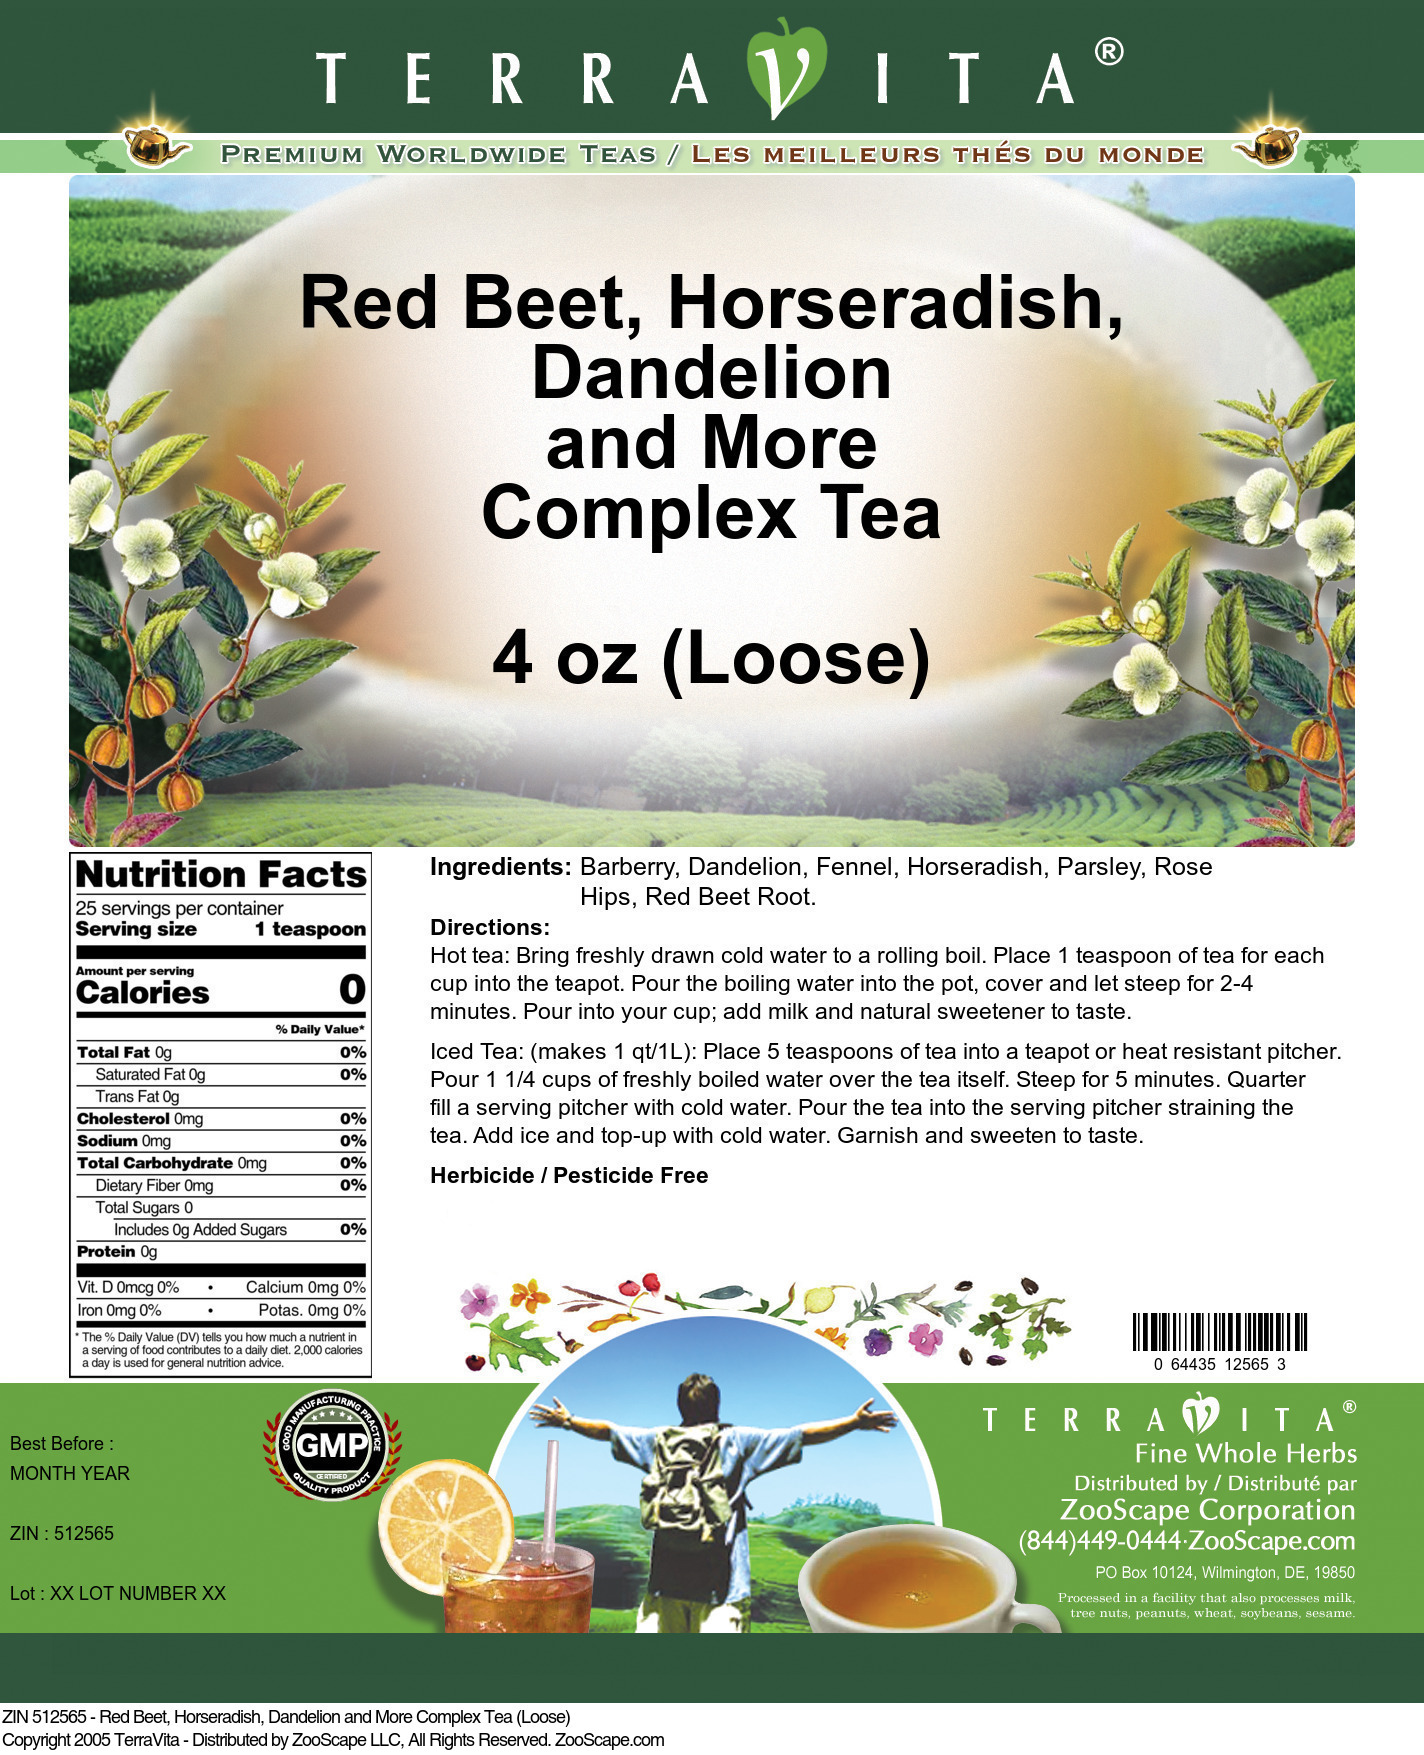 Red Beet, Horseradish, Dandelion and More Complex Tea (Loose) - Label